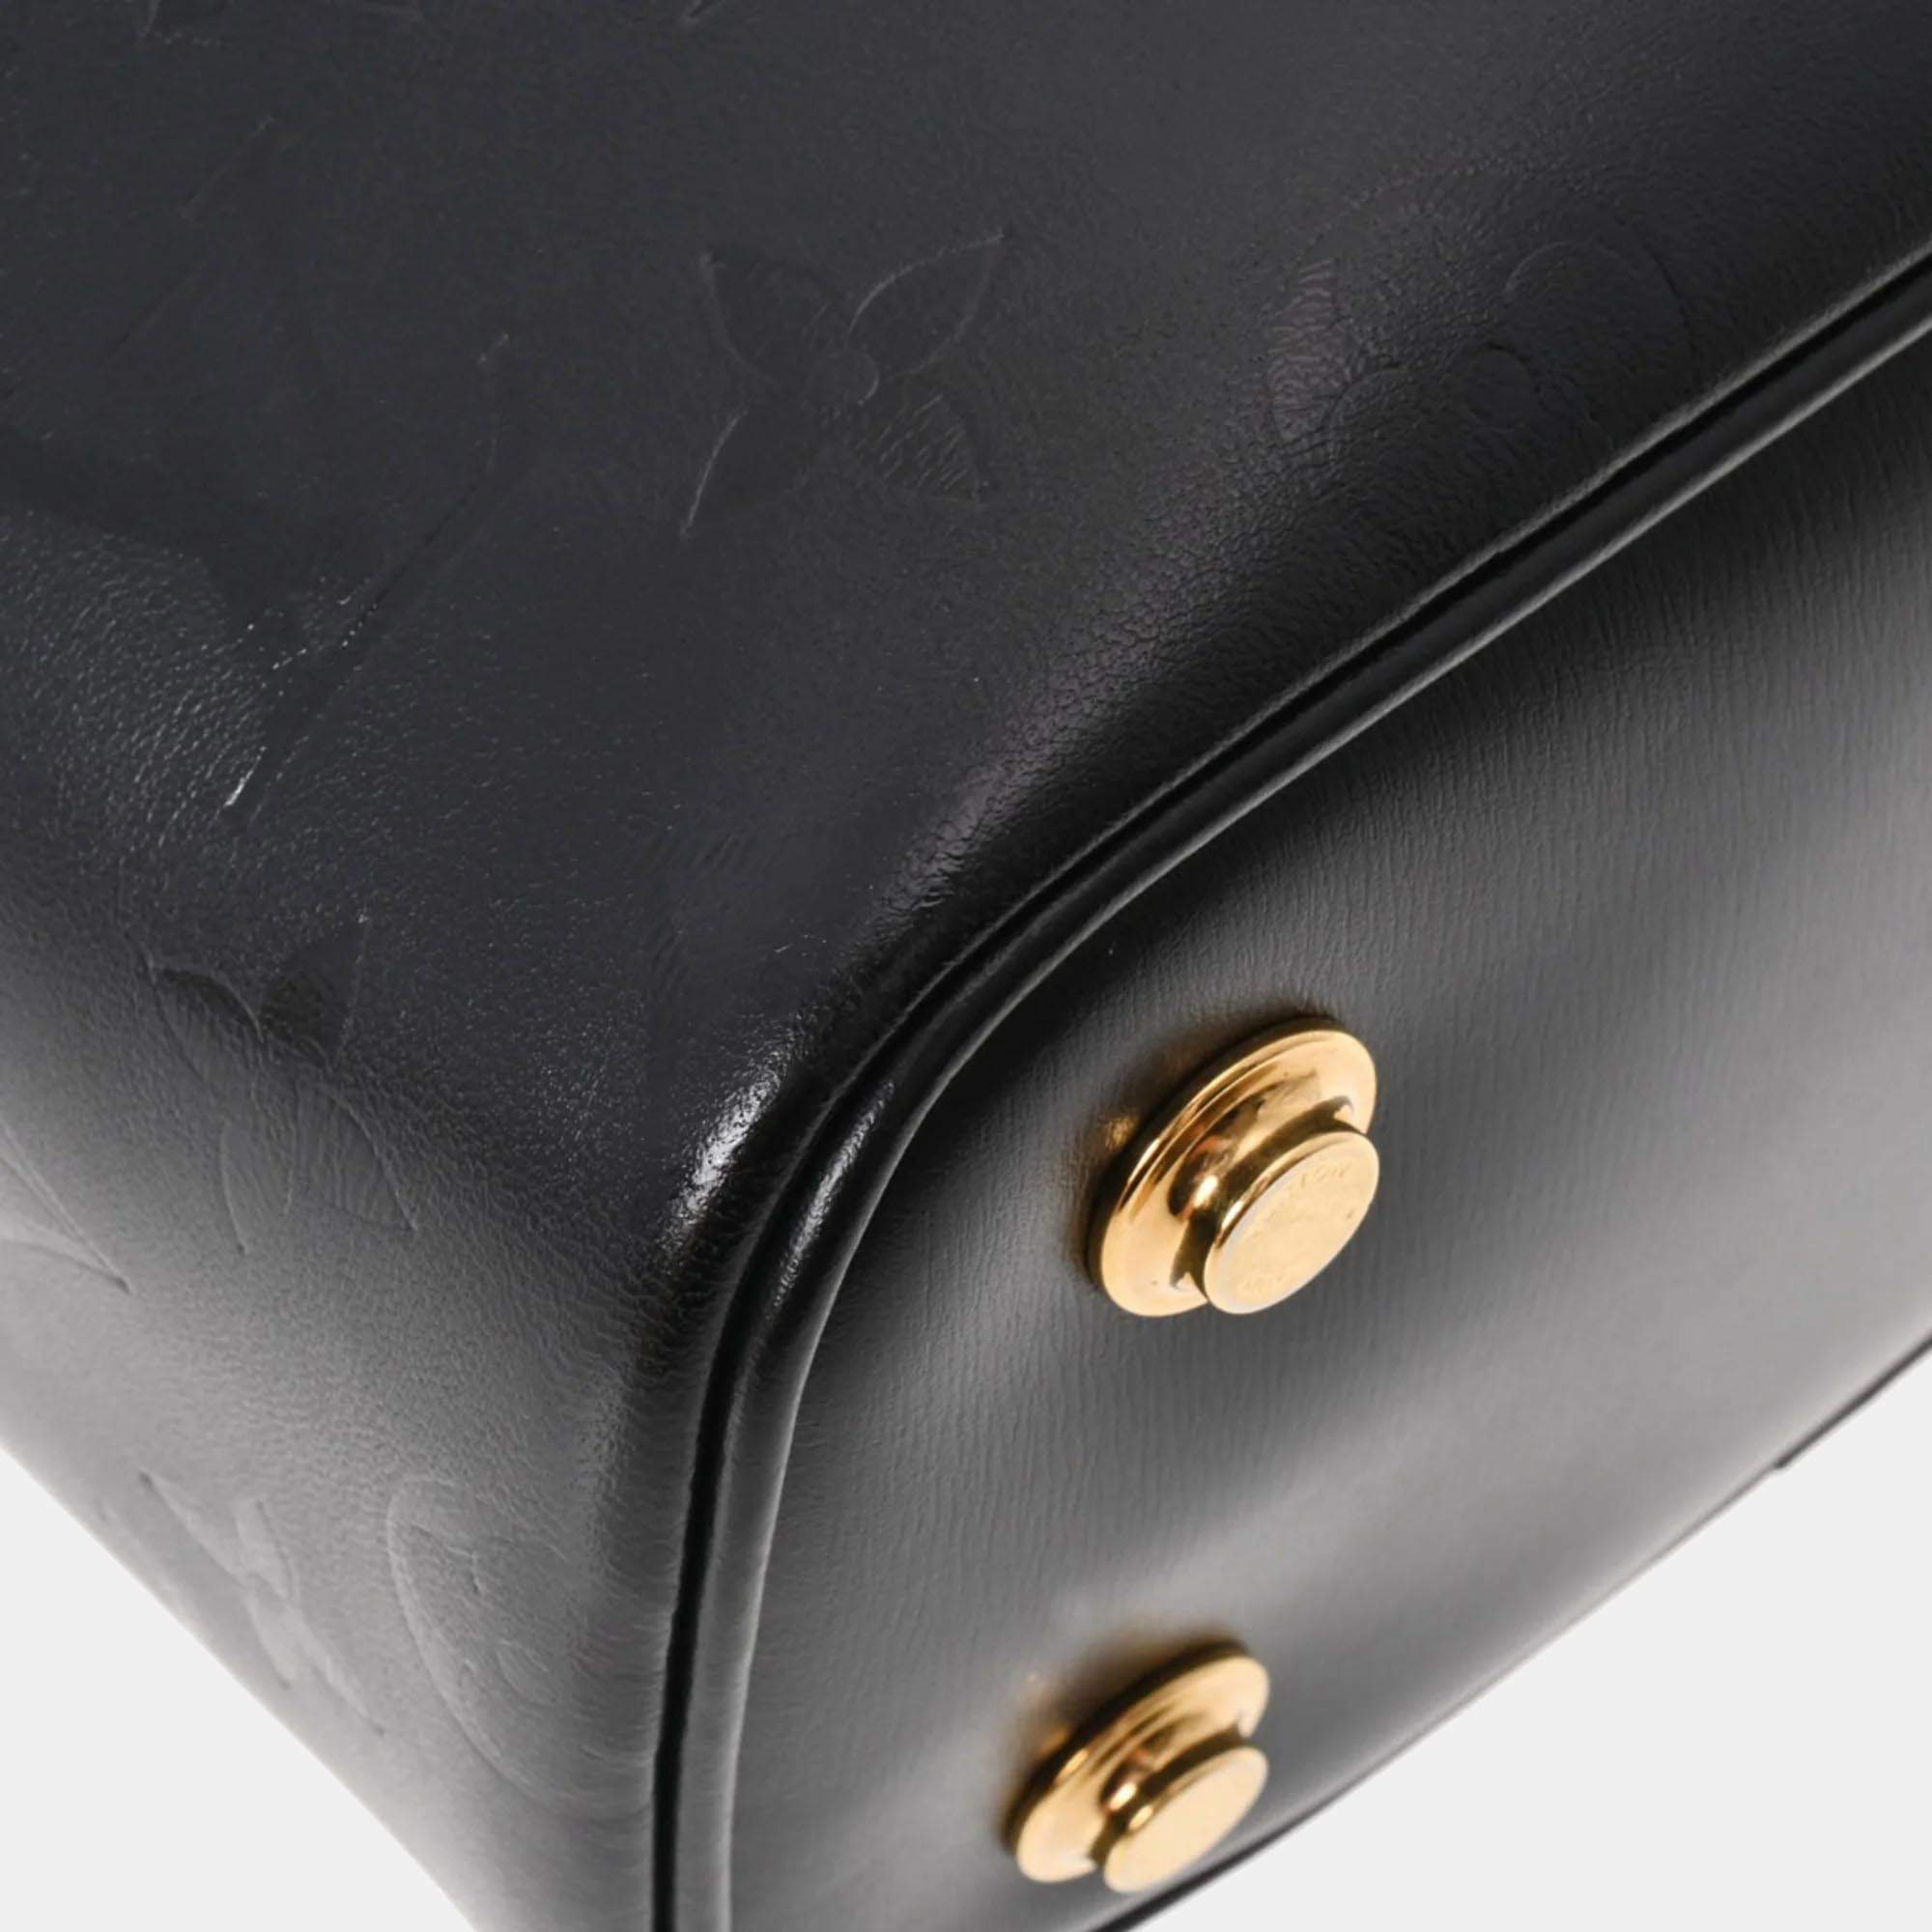 Louis Vuitton Monogram Ink Vanity PM Shoulder Bag, Louis Vuitton Handbags